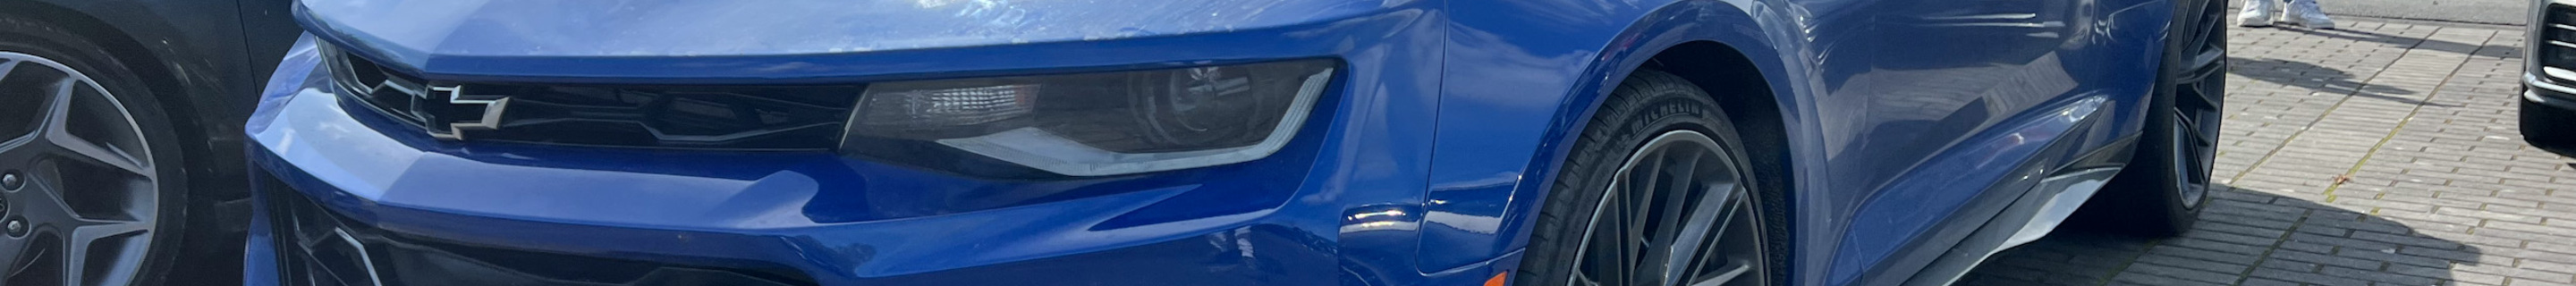 Chevrolet Camaro ZL1 2019